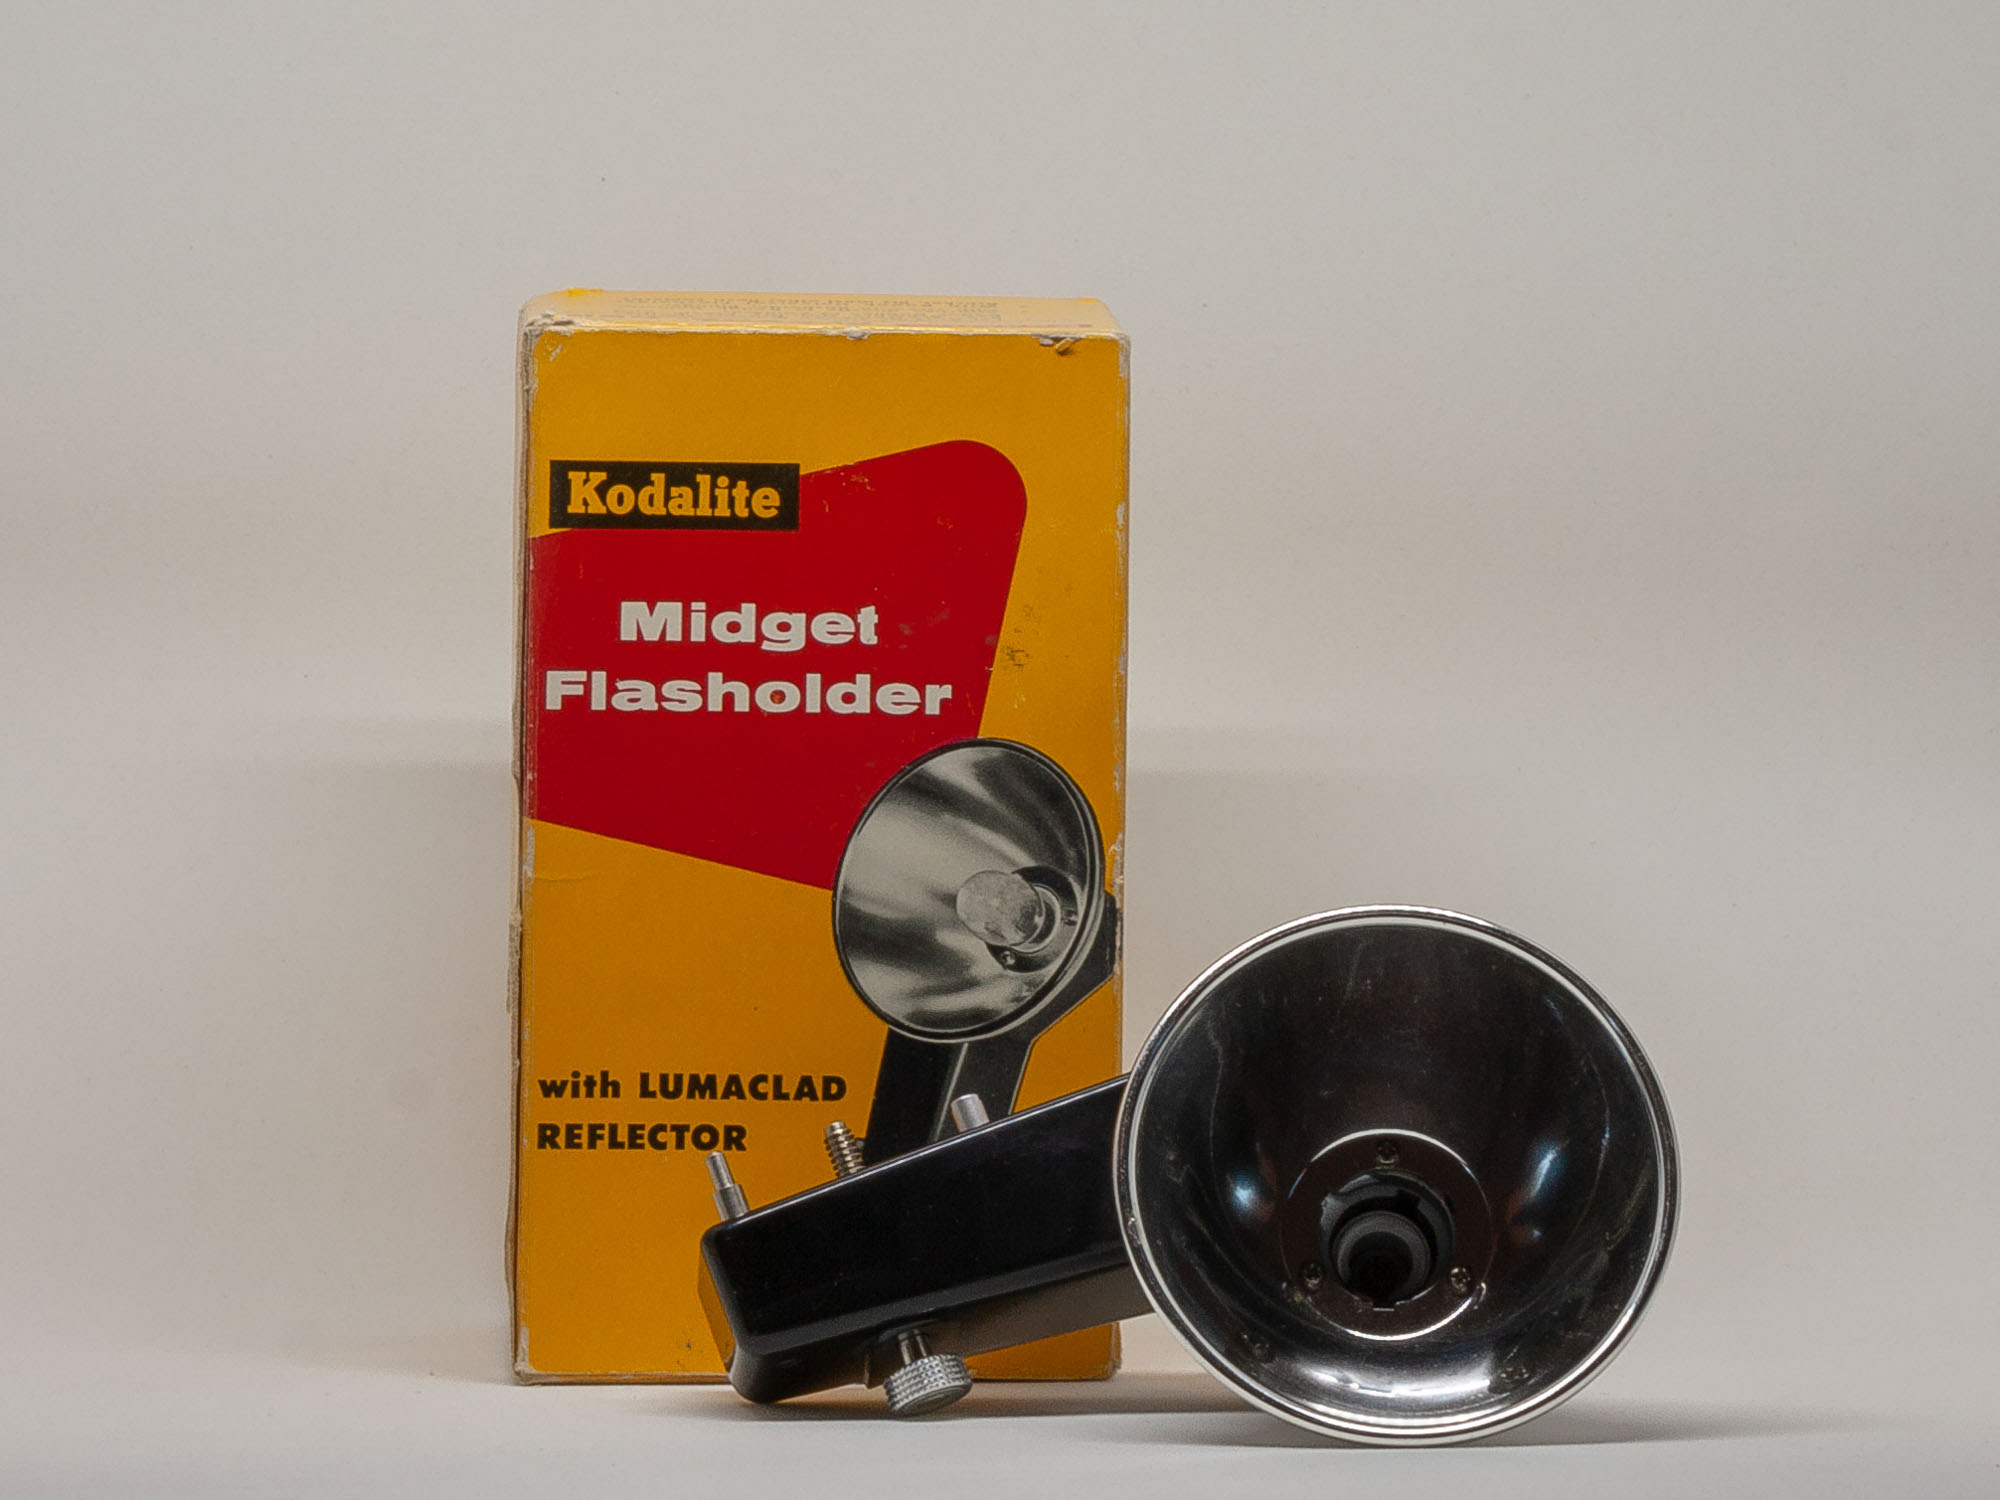 Kodak Kodalite Midget Flasholder with packaging